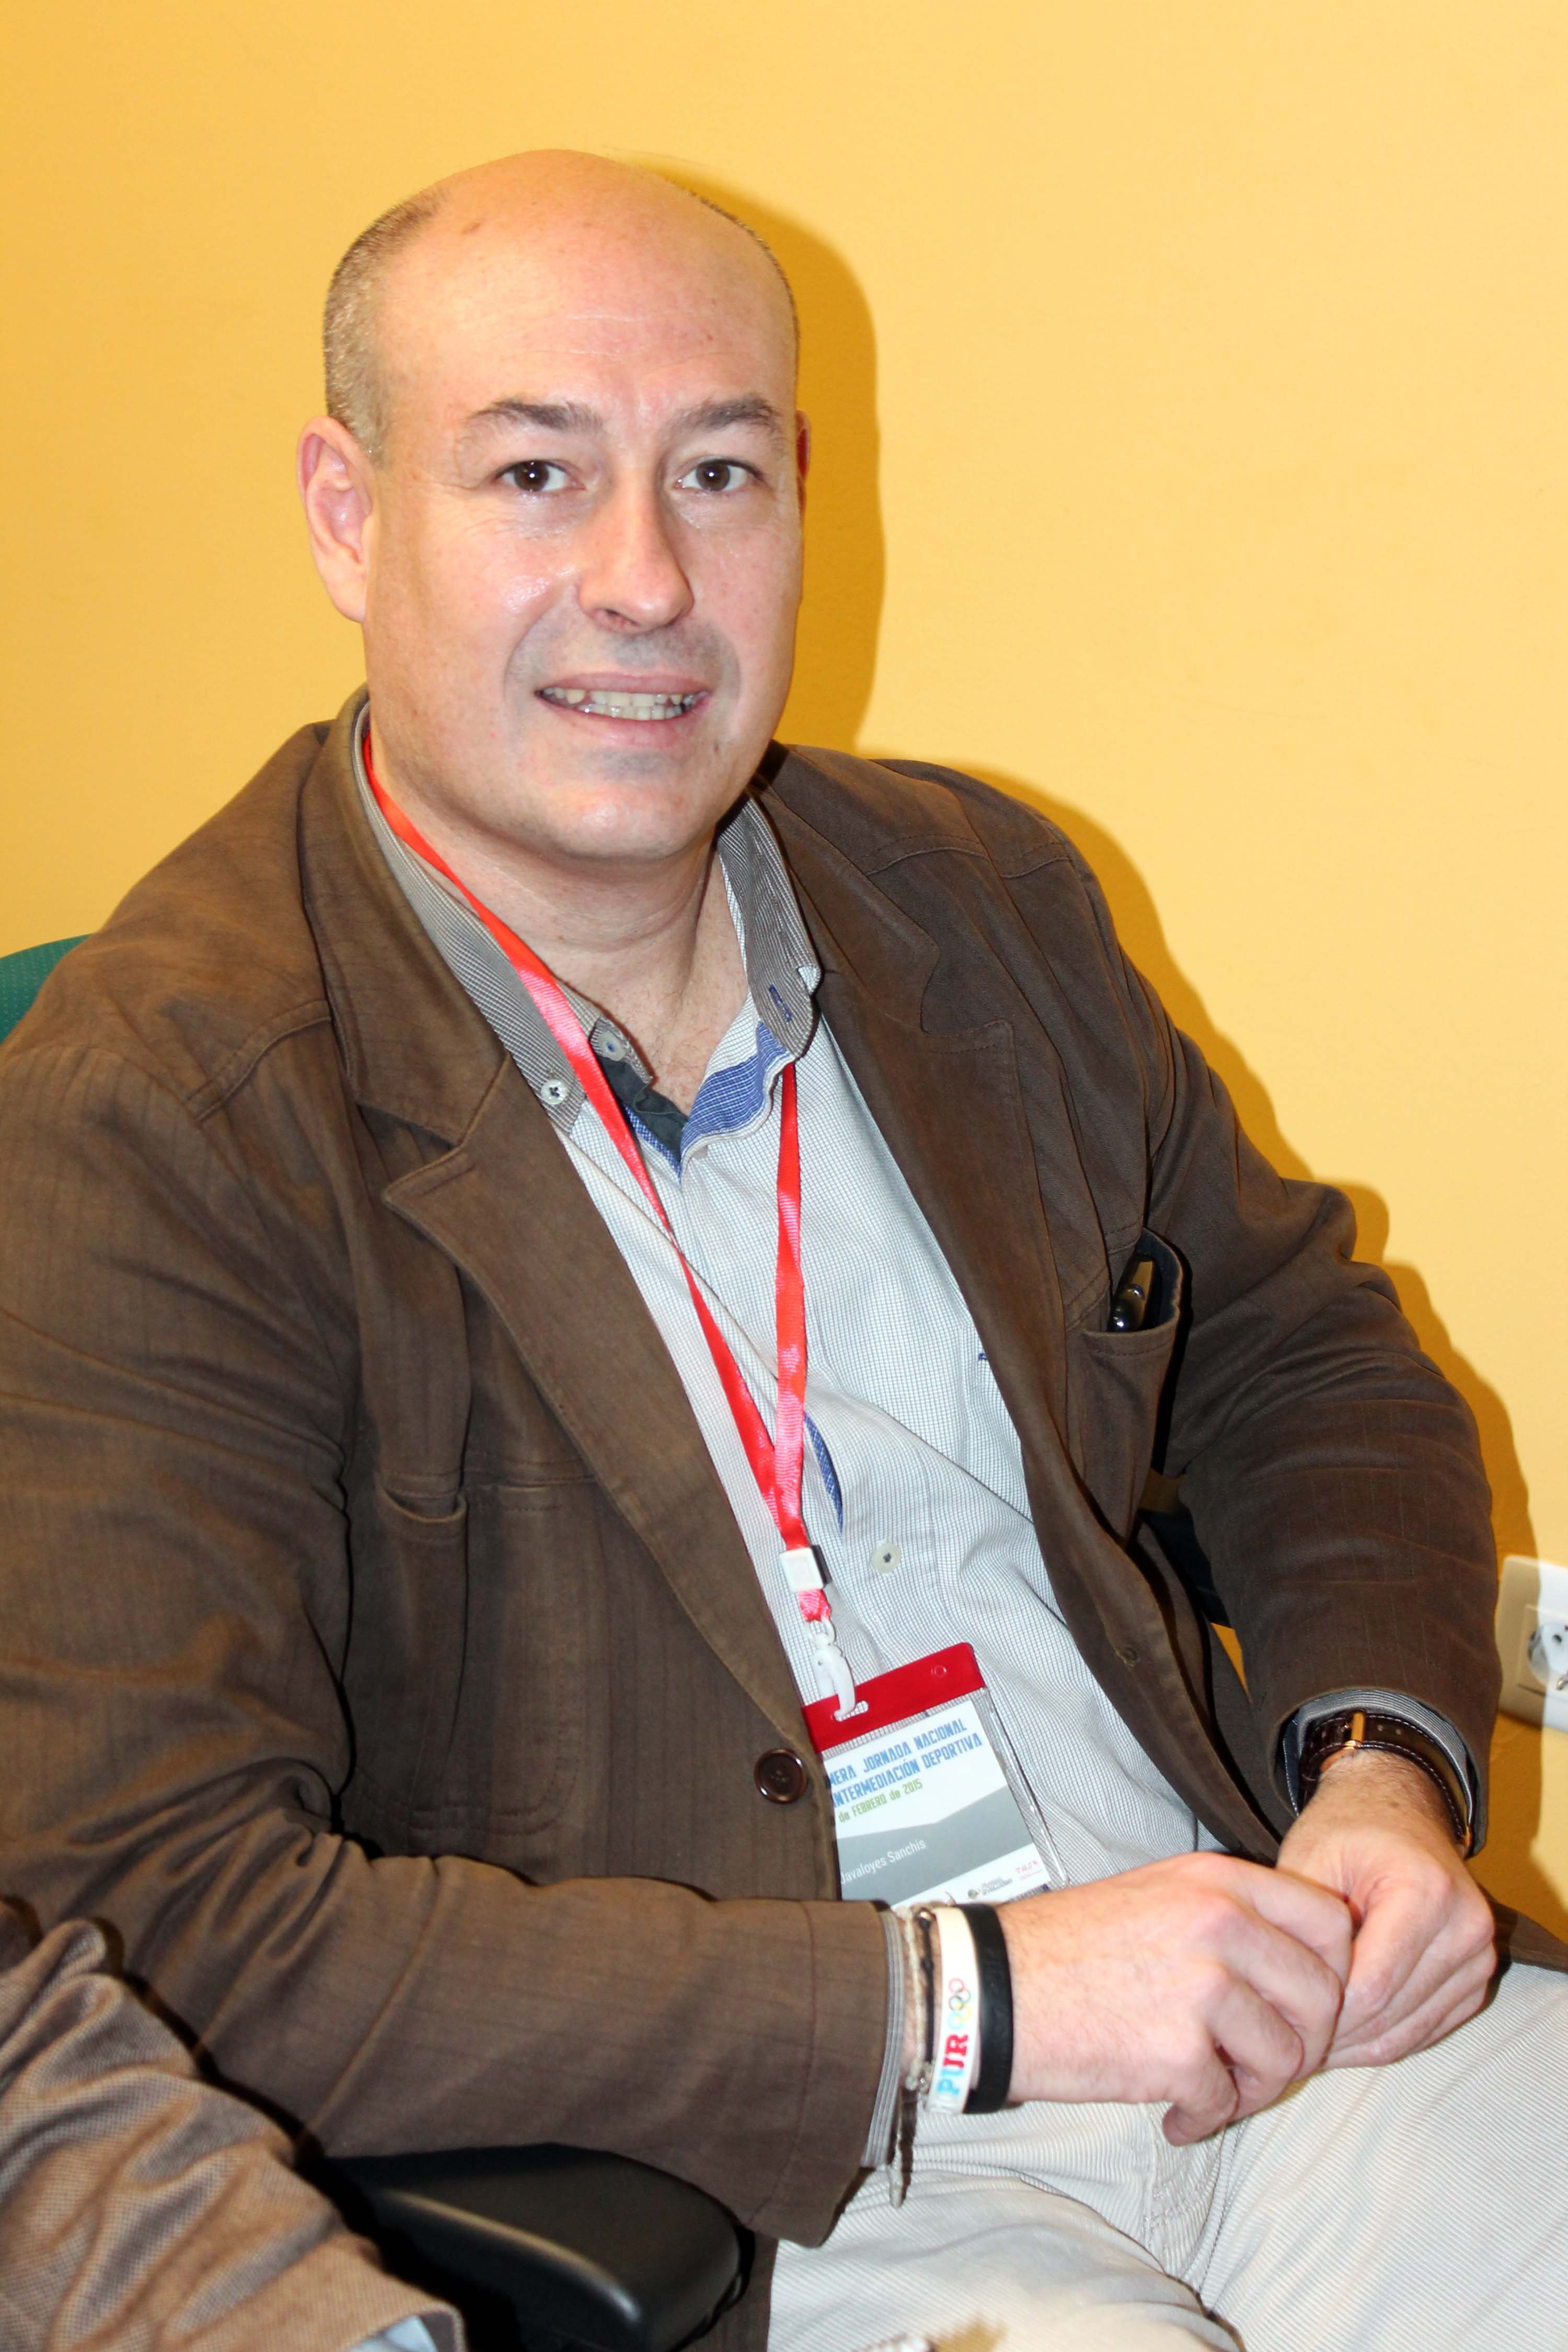 Vicente Javaloyes Sanchis